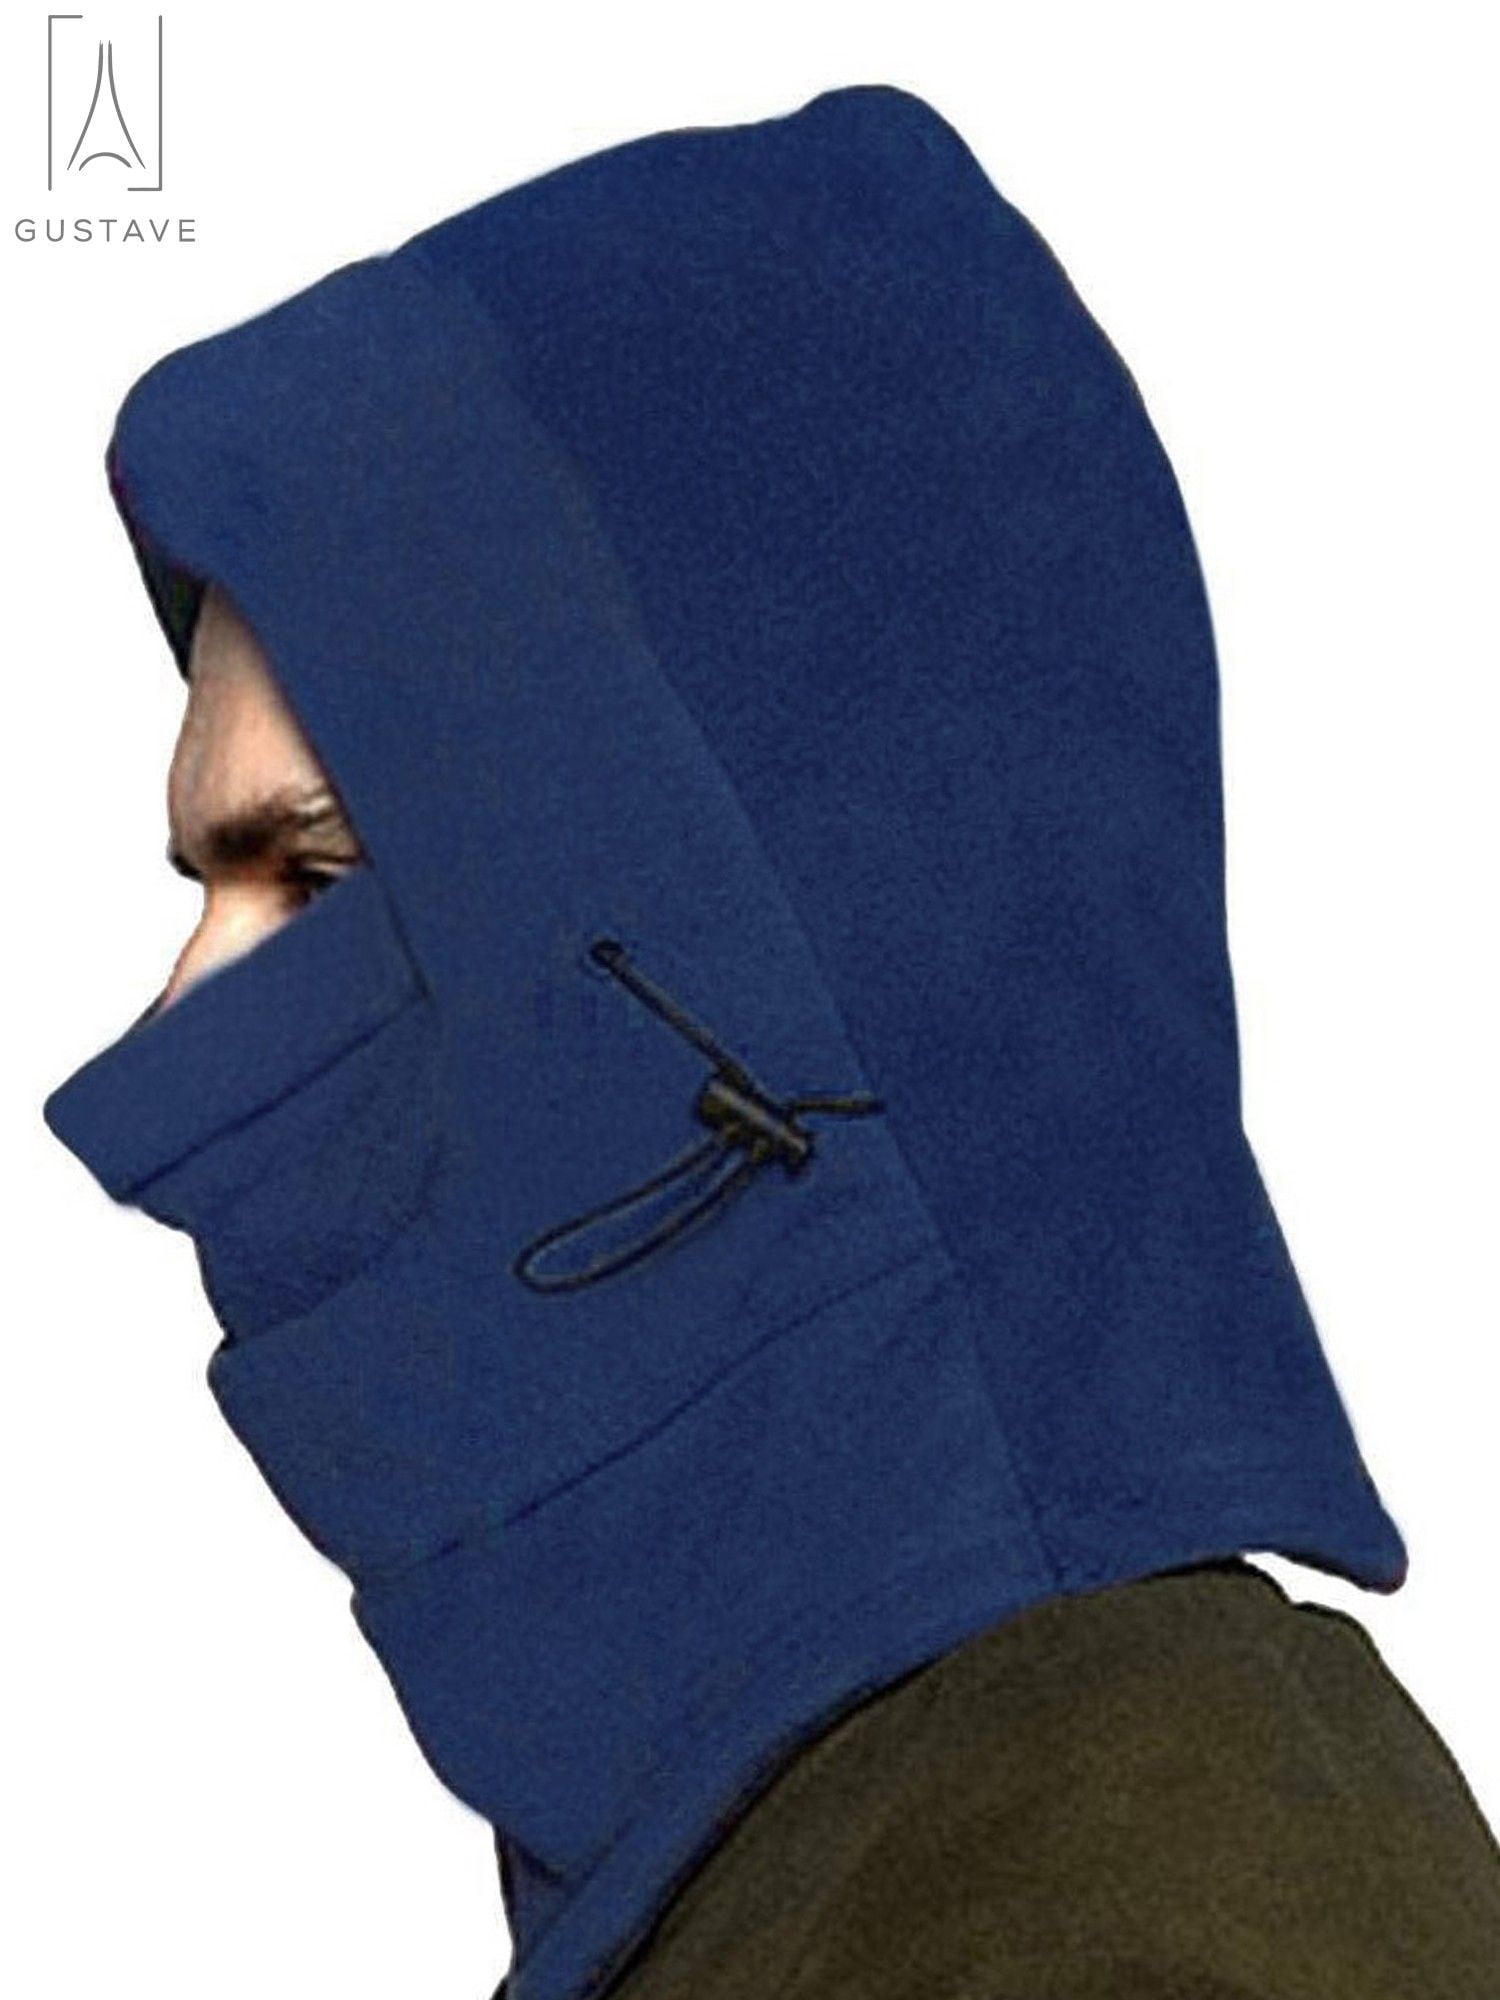 Fleece 6 in 1 Facemask Balaclava Hoodie Neck Warmer Windstopper Colors Vary 